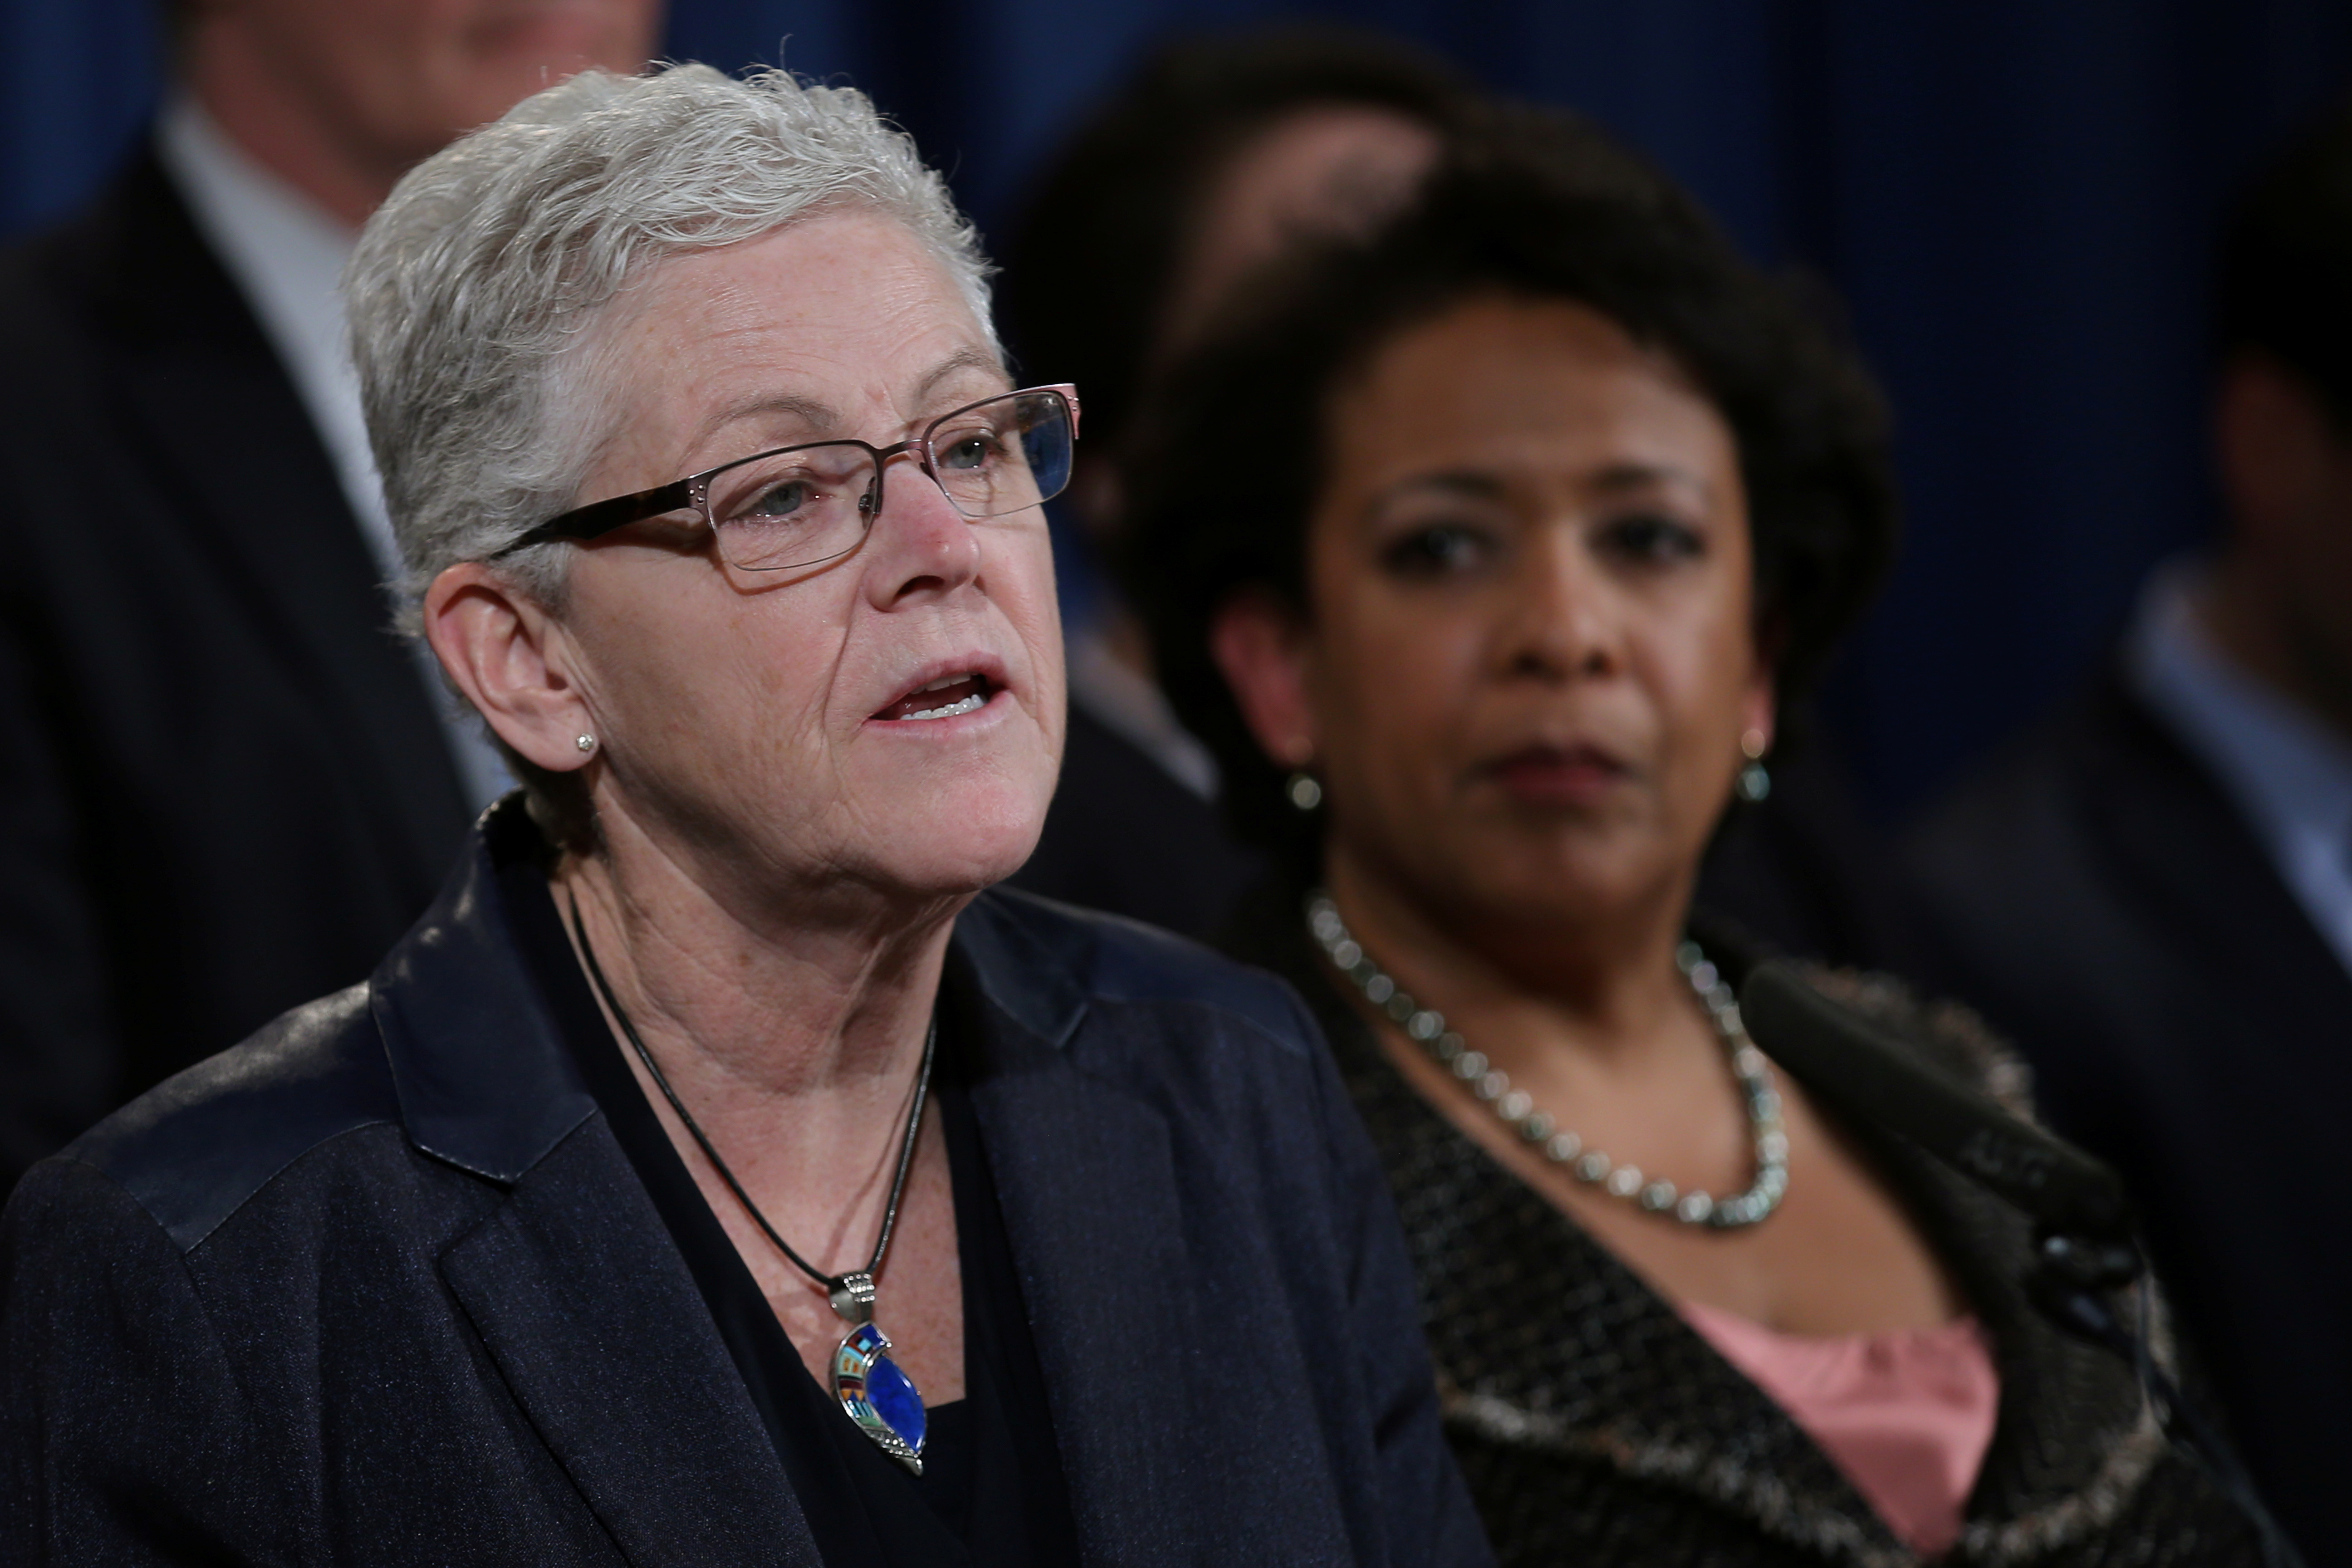 EPA Administrator Gina McCarthy speaks during a news conference, accompanied by U.S. Attorney General Loretta Lynch, in Washington